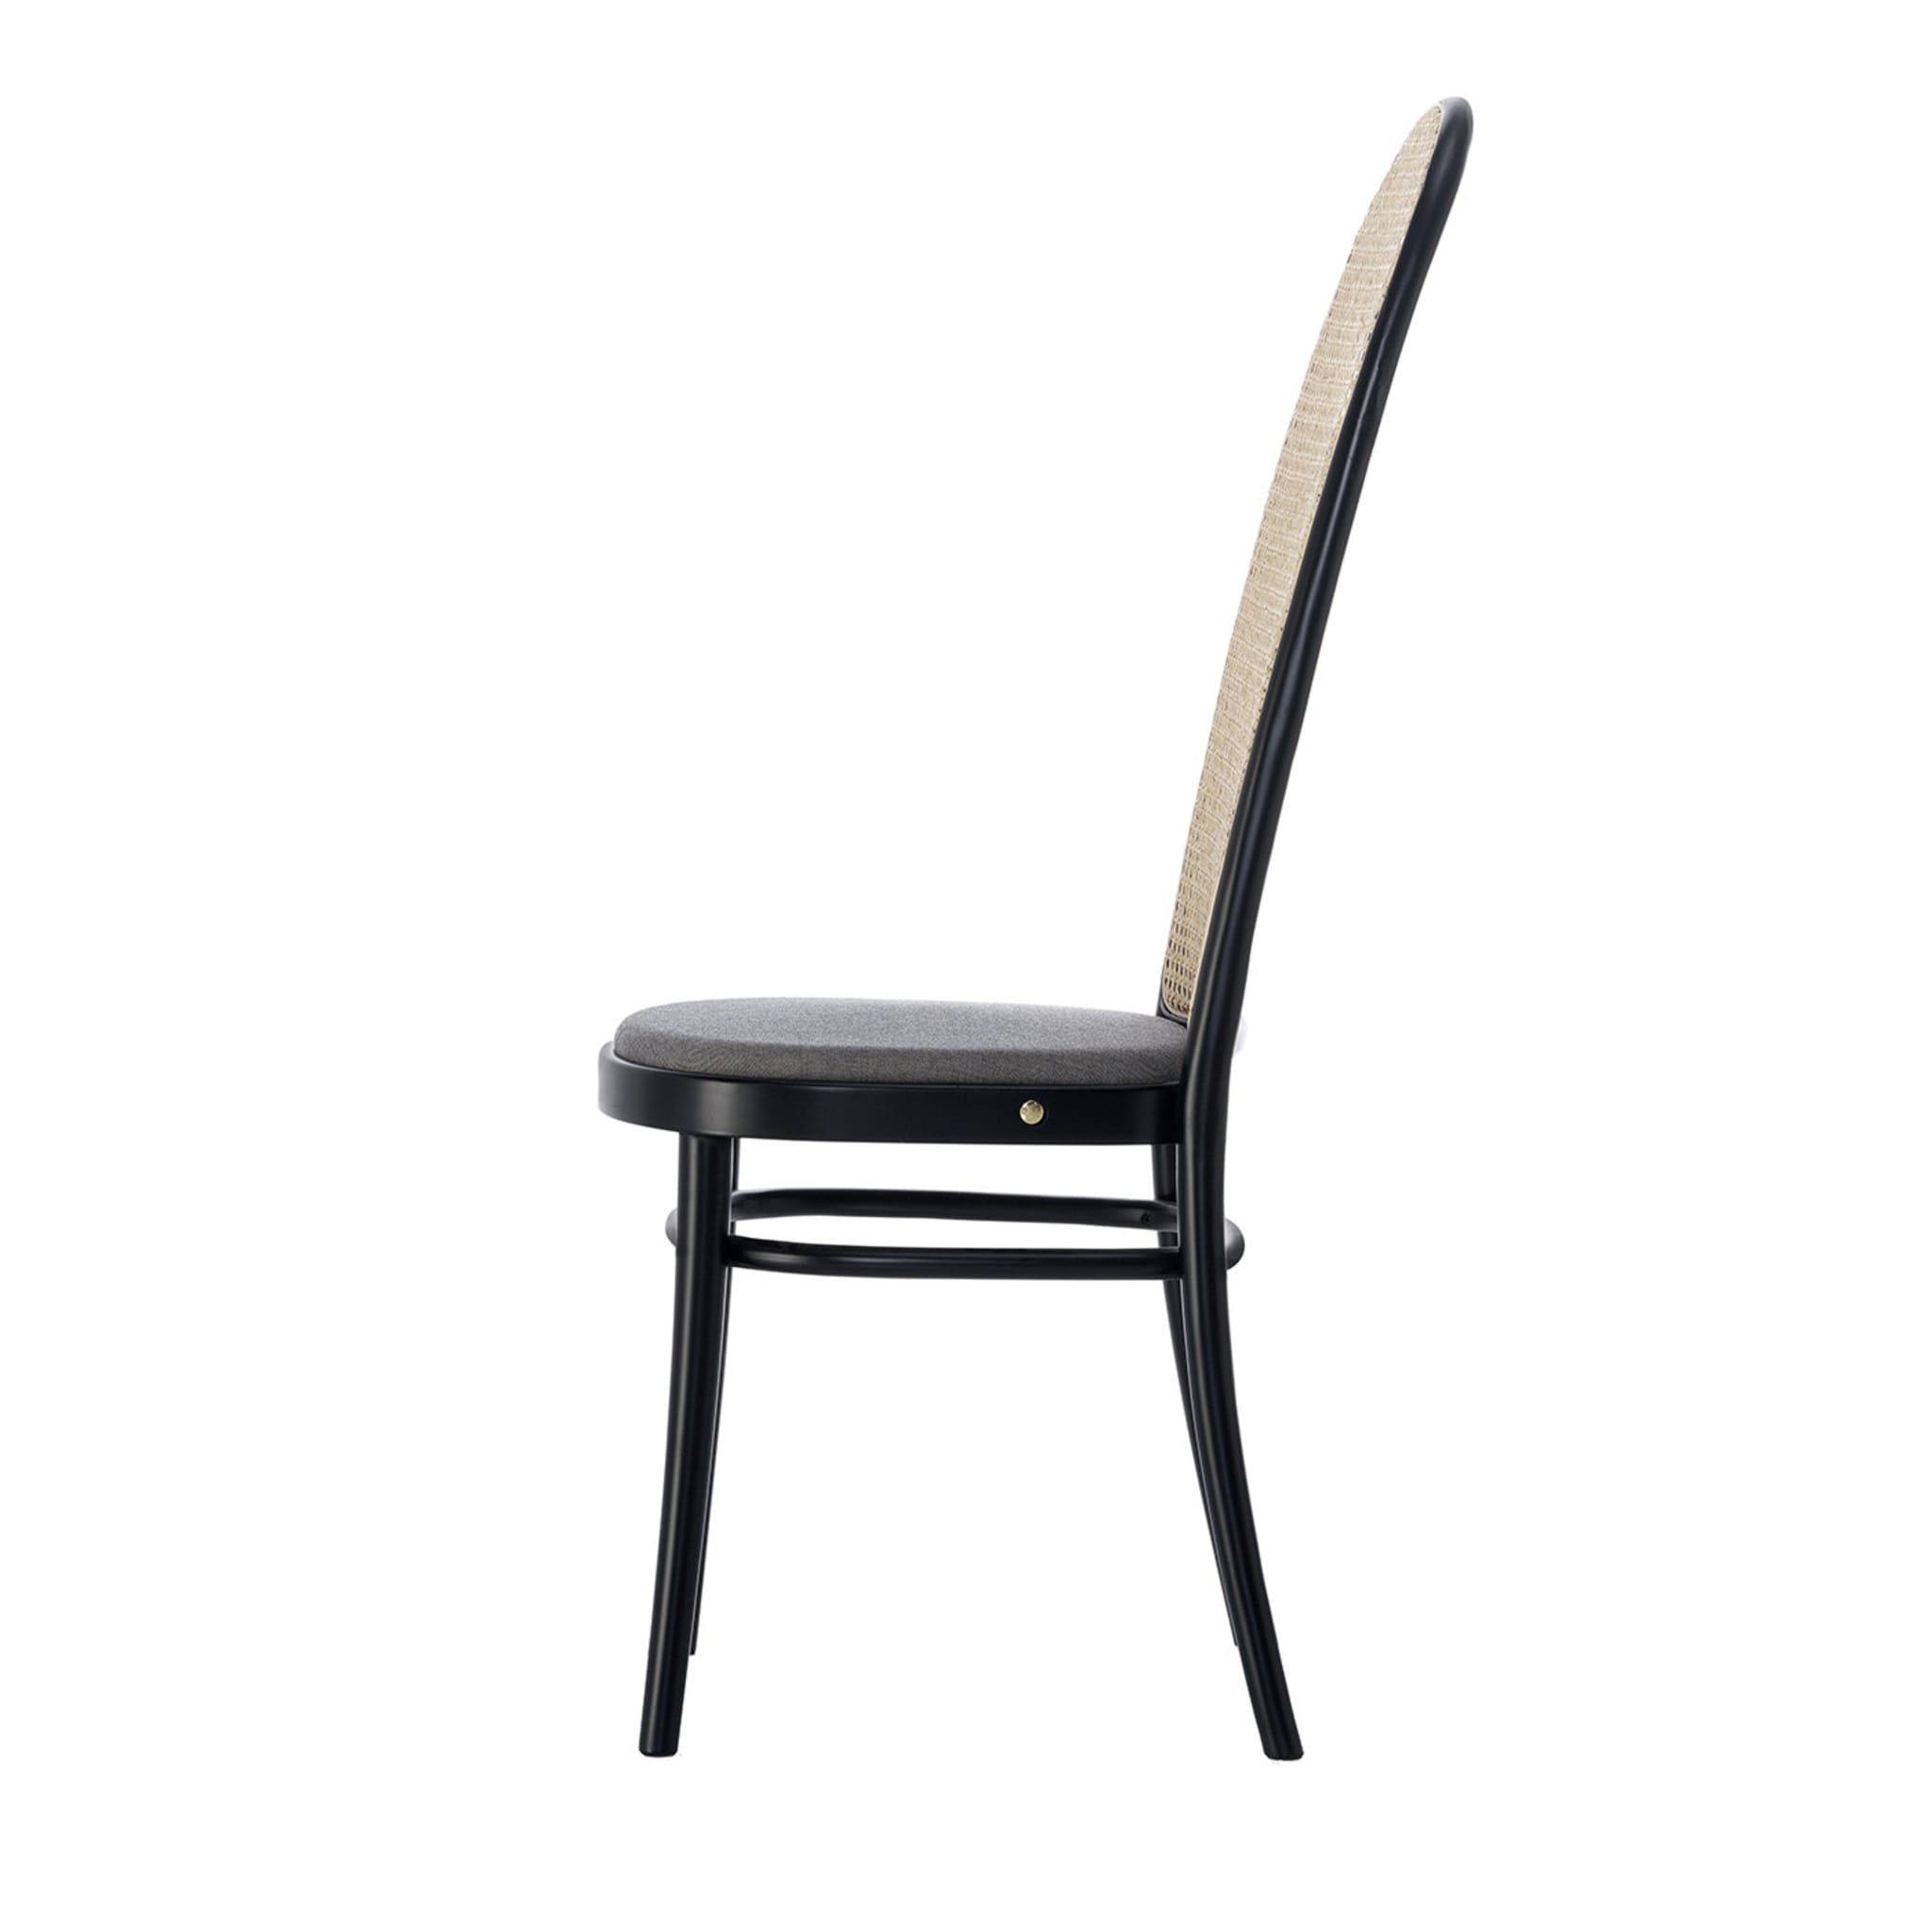 Morris Black Tall Chair by GamFratesi - Alternative view 2